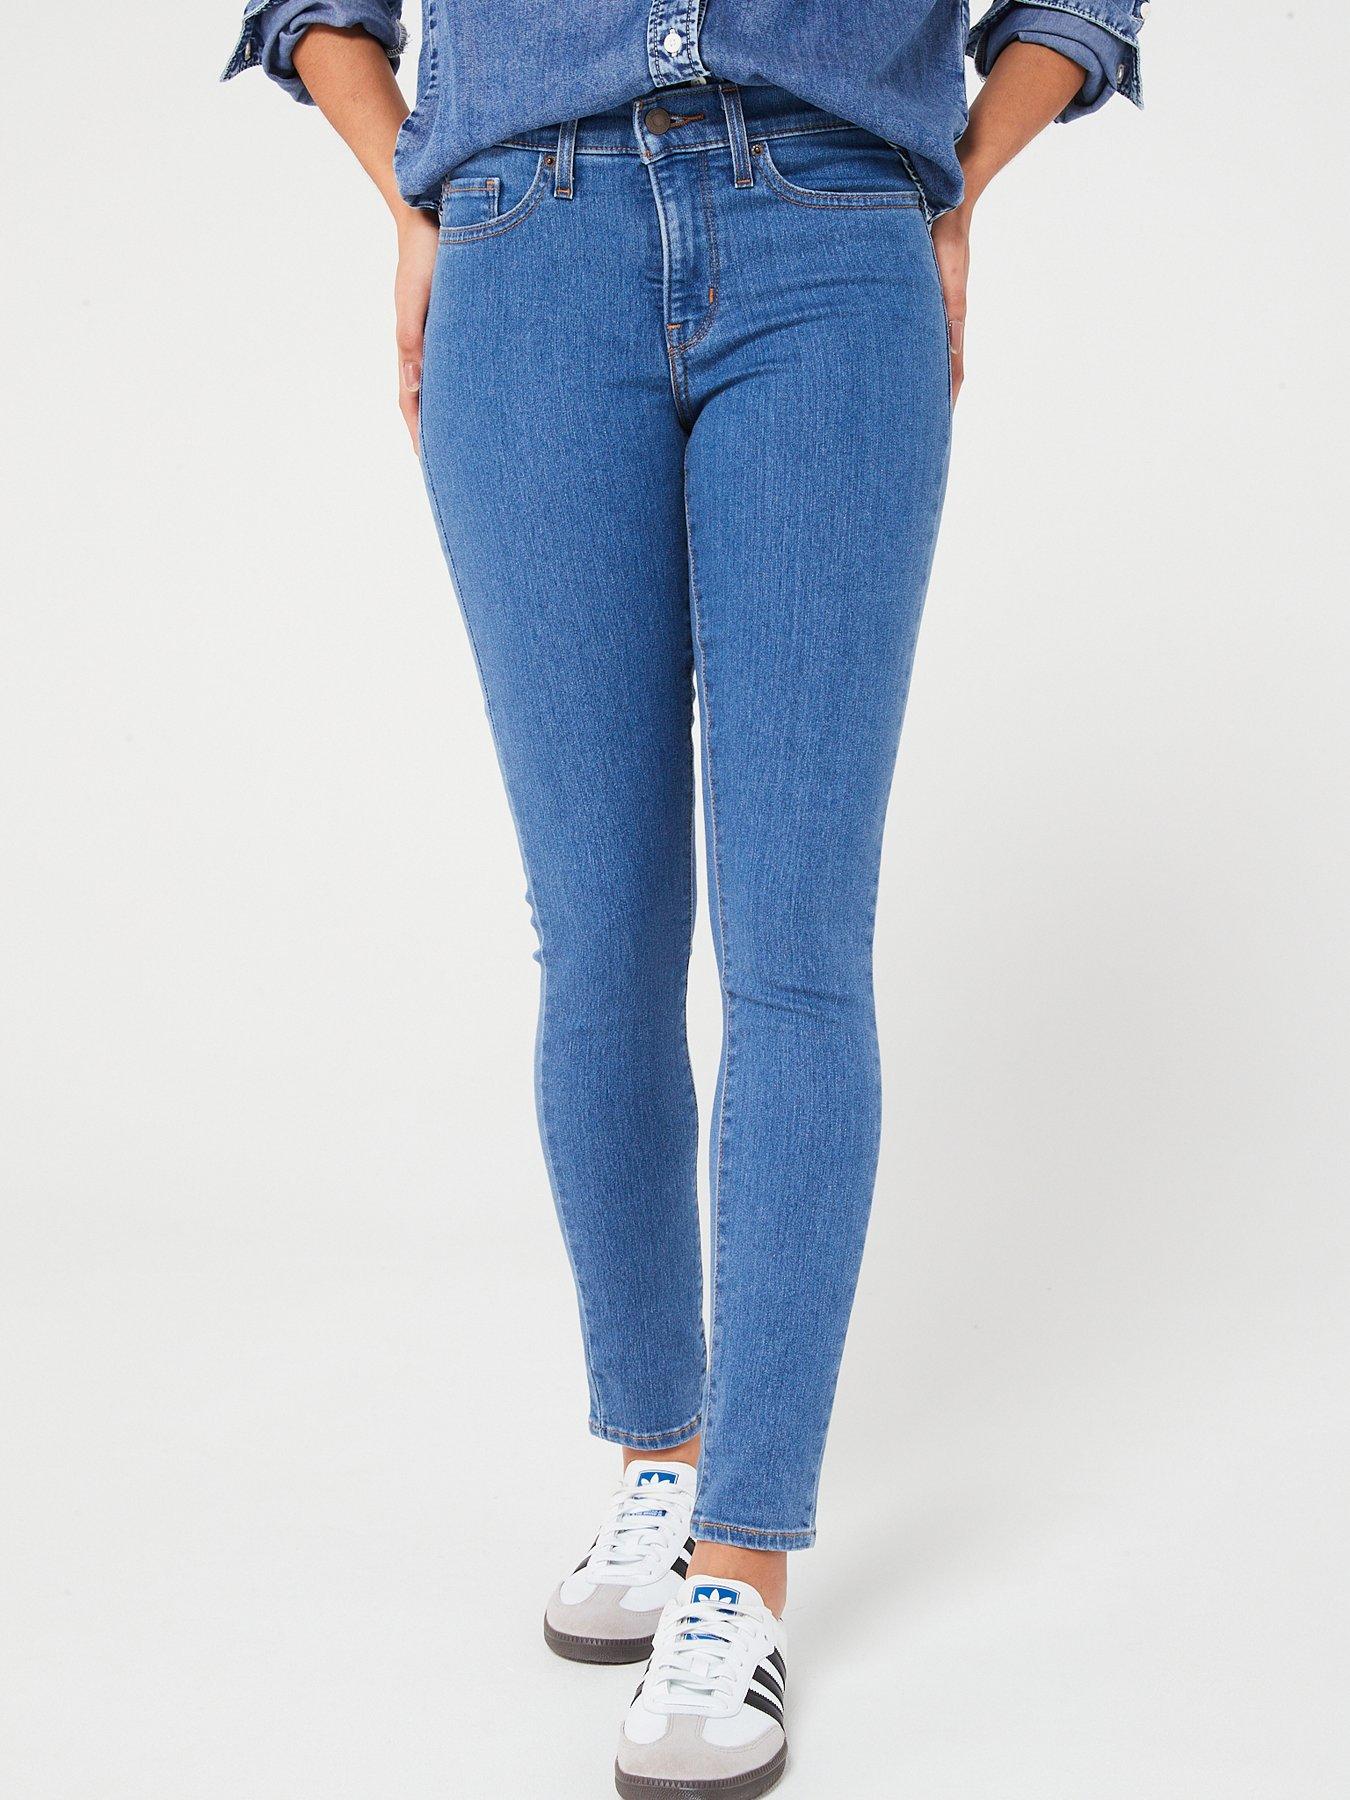 Levi's Women's 311 Shaping Mid Rise Skinny Jeans - Darkest Sky